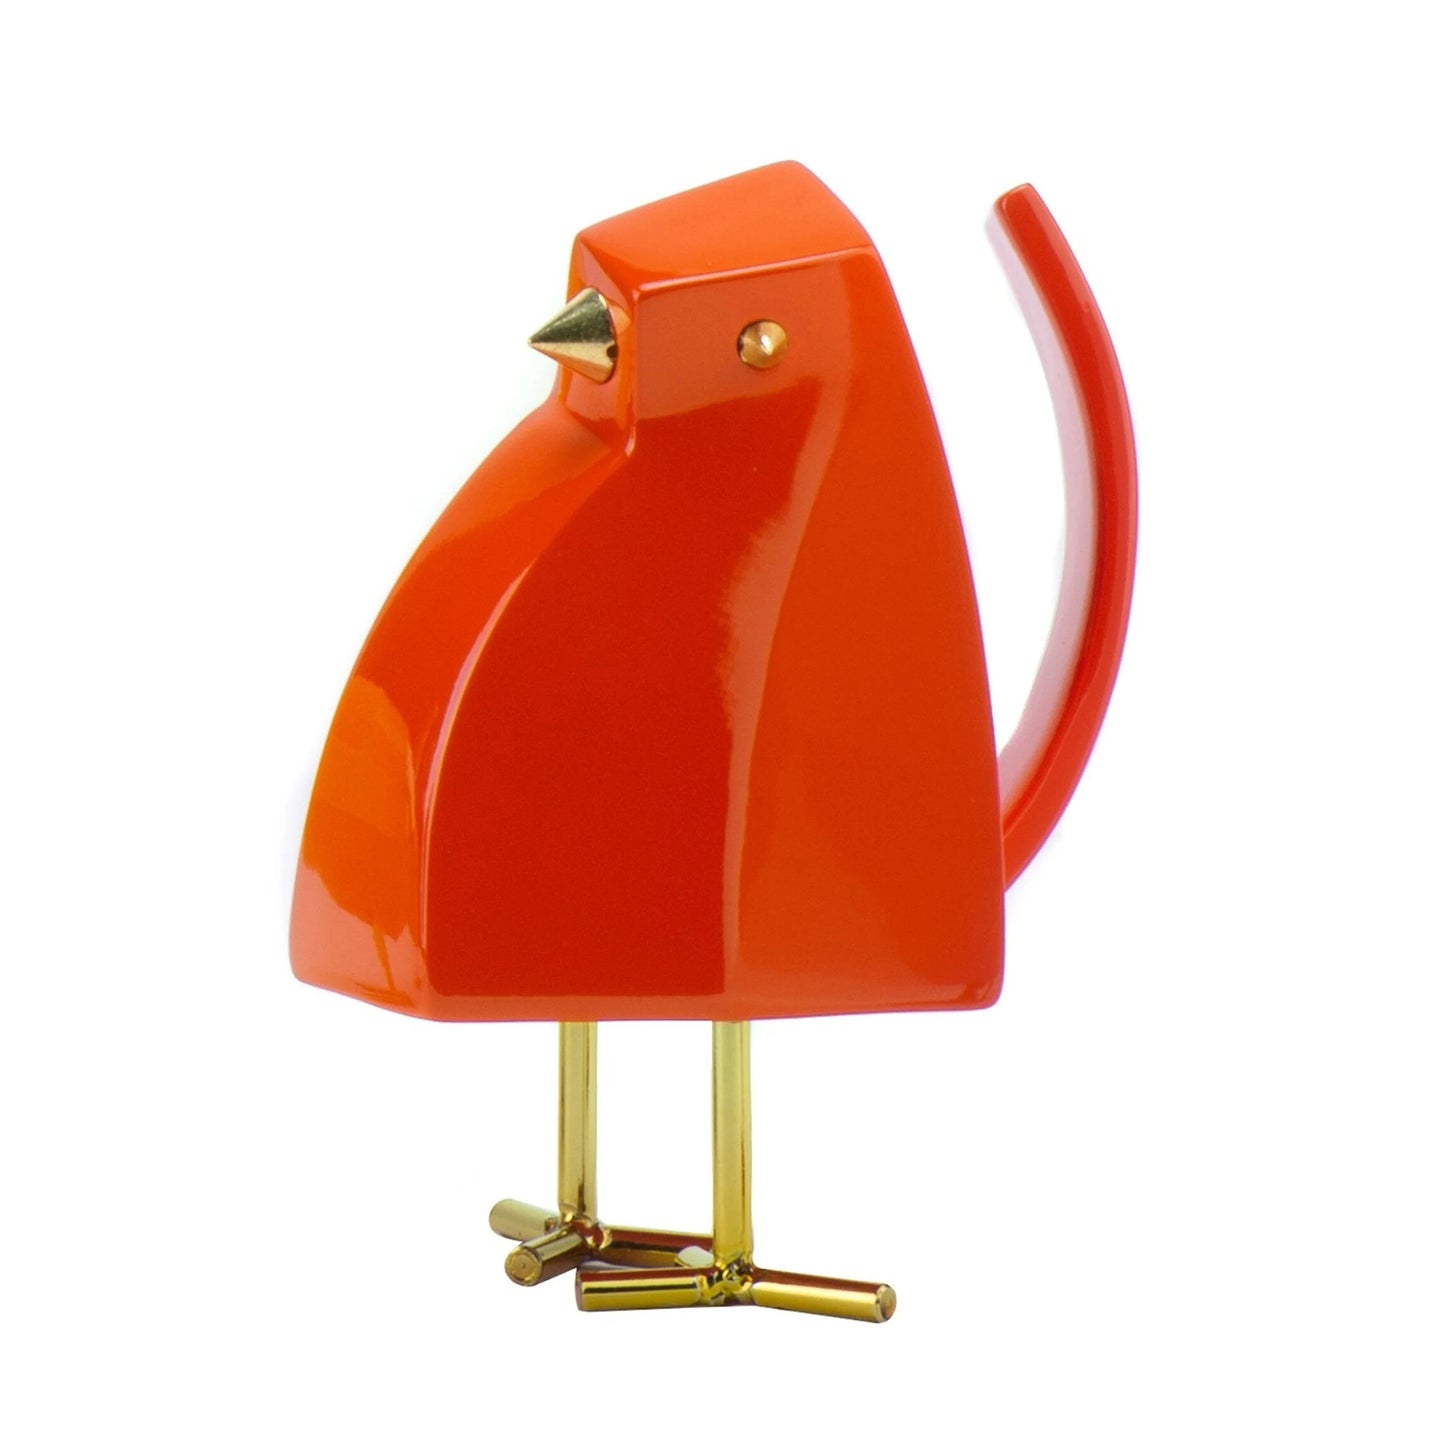 Finesse Decor Orange Bird Sculpture 1